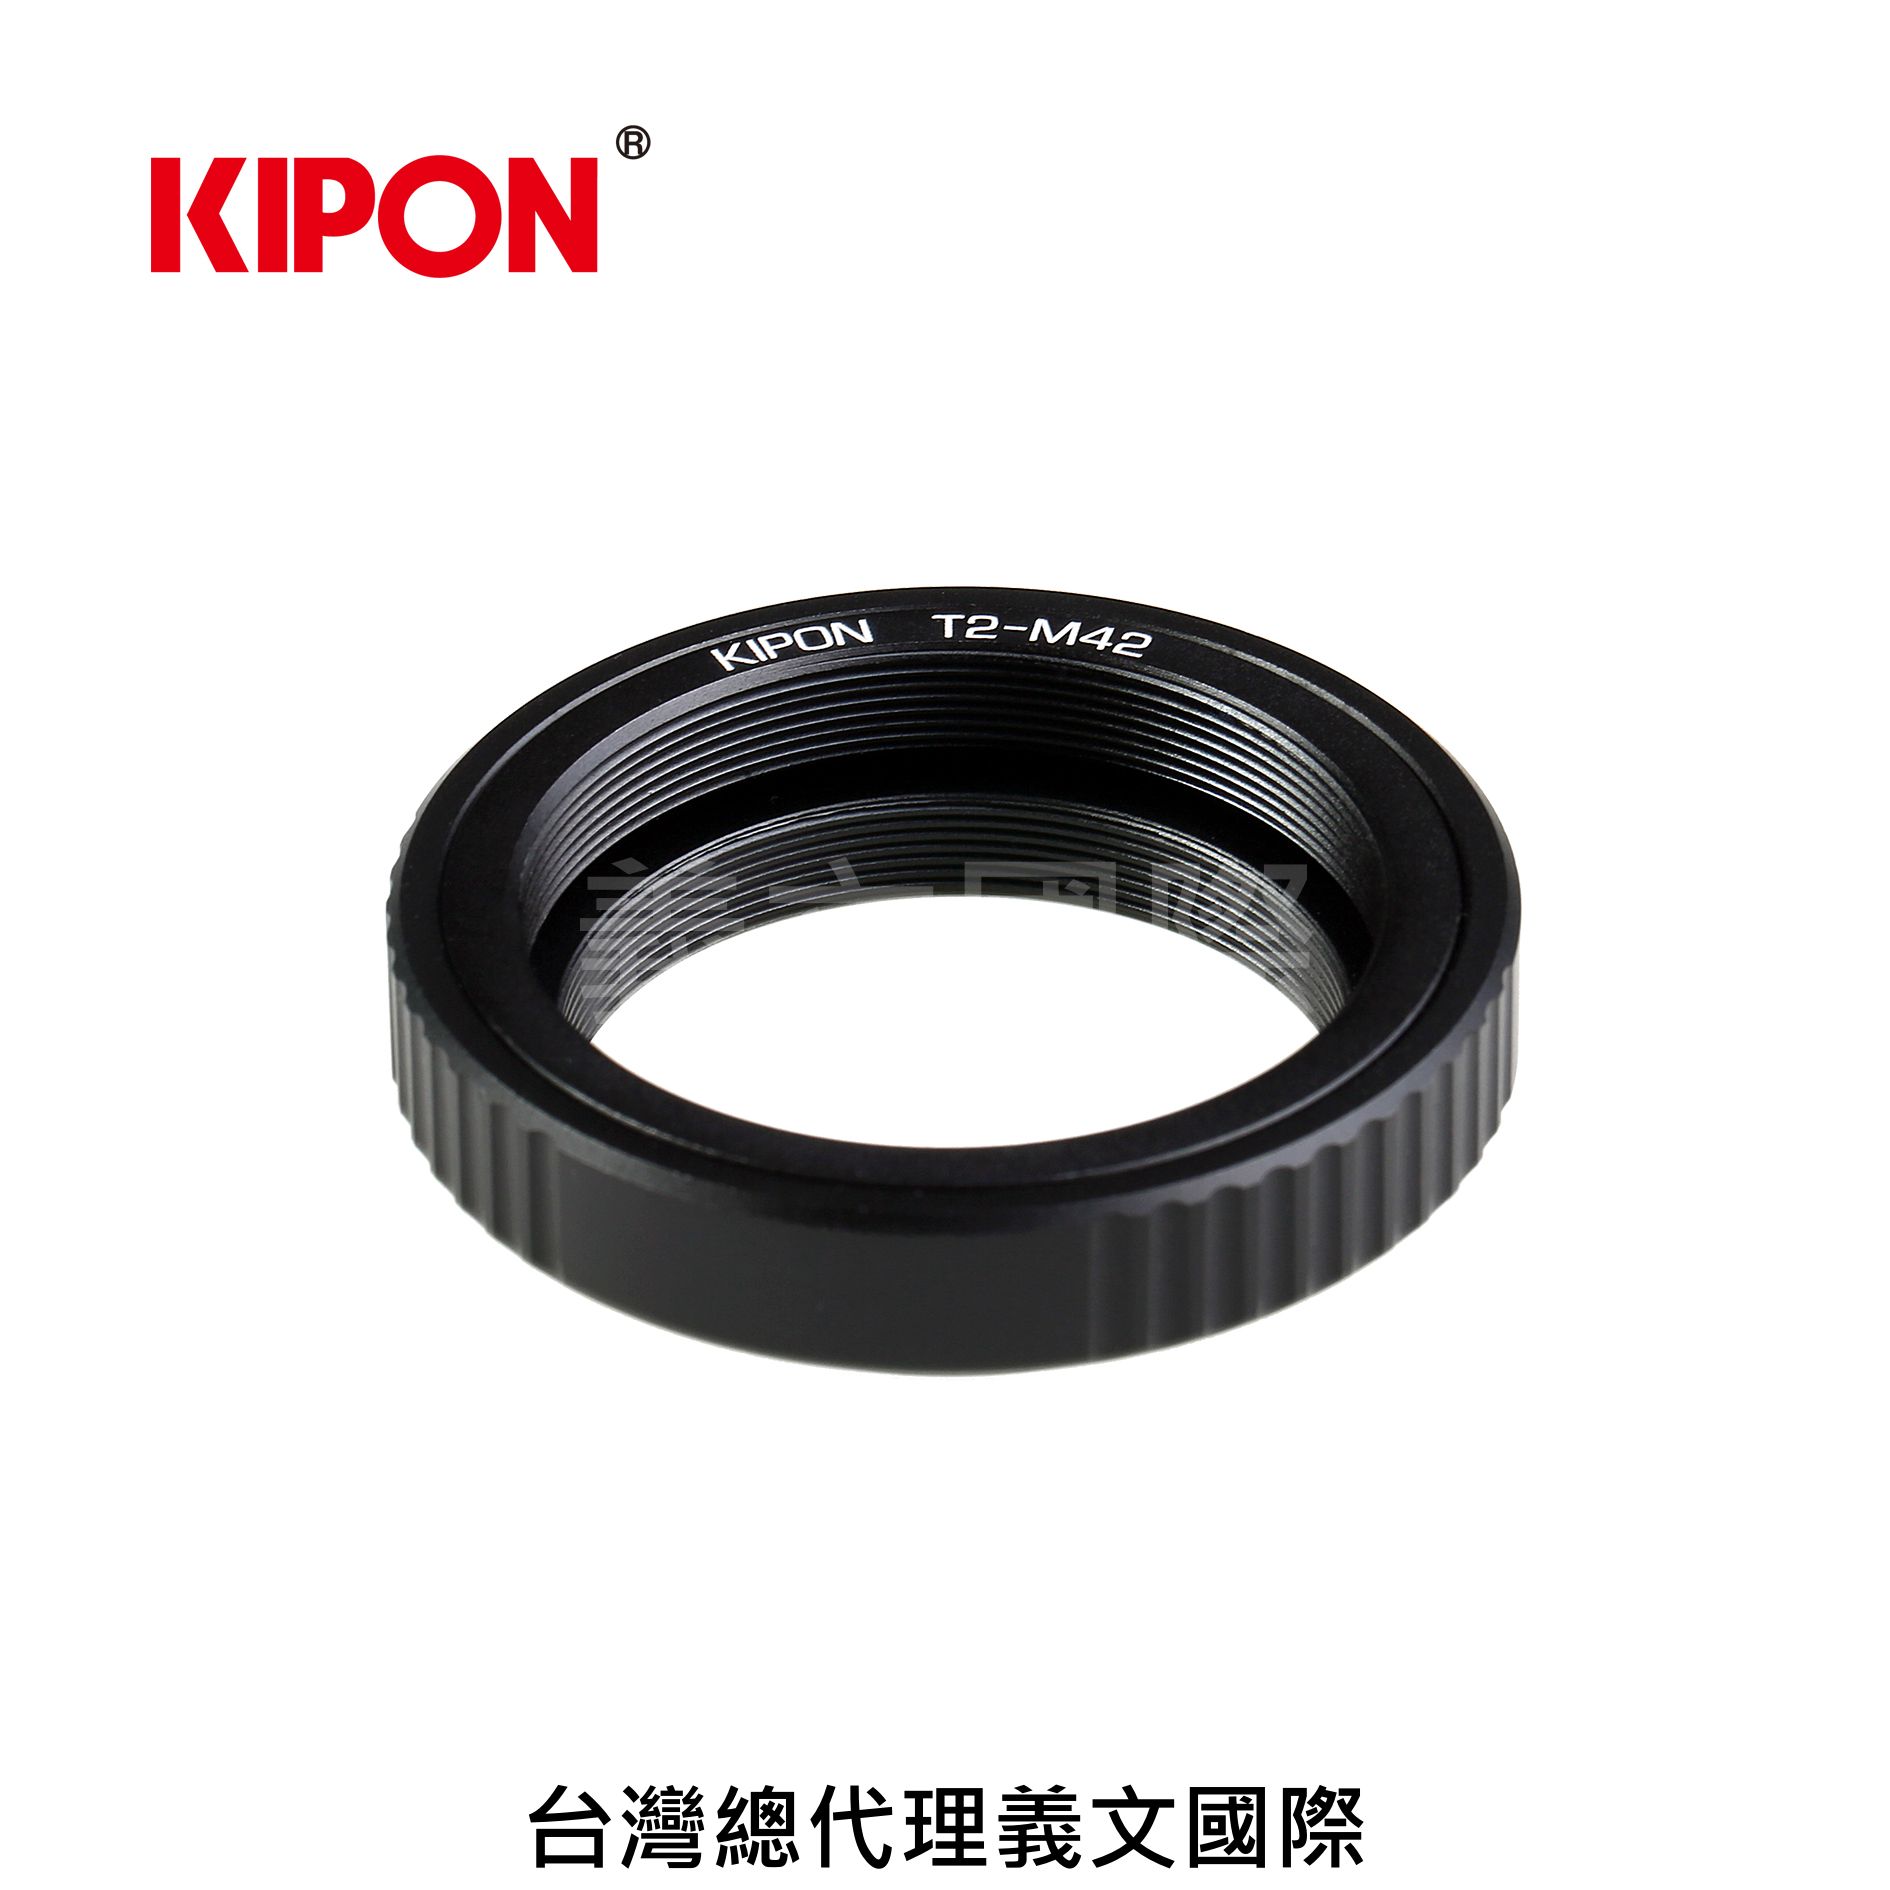 Kipon轉接環專賣店:T2-M42